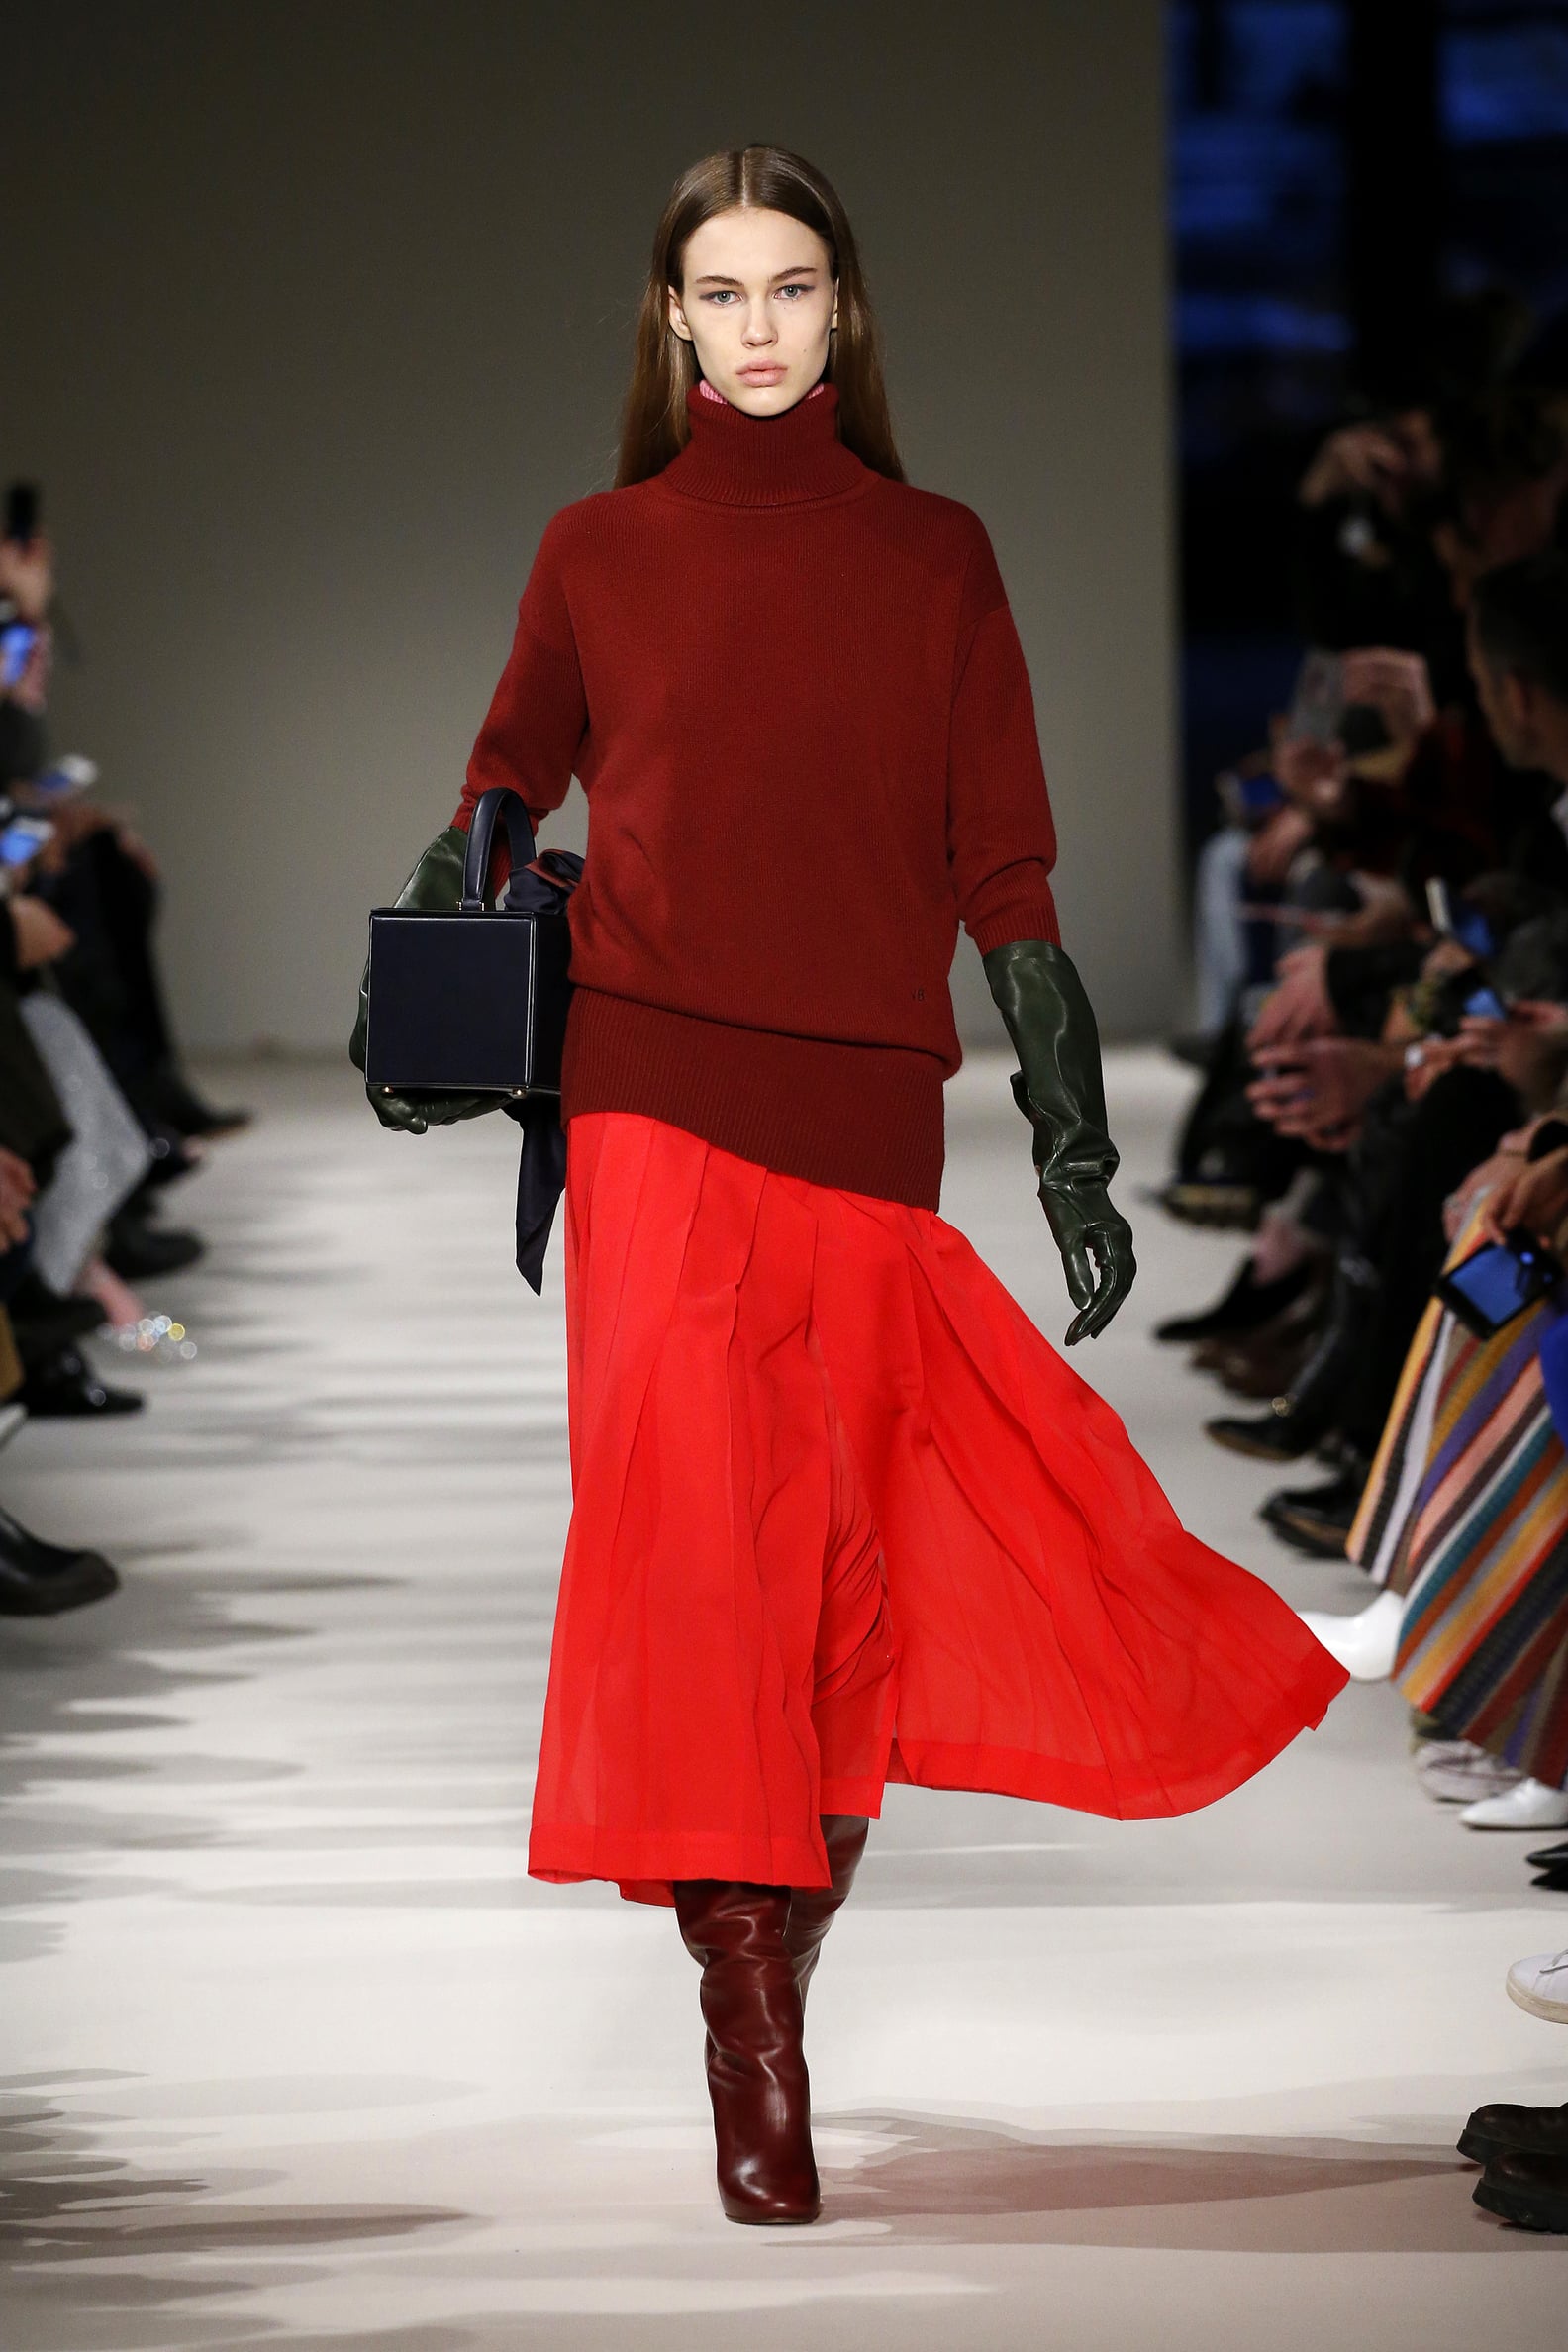 Victoria Beckham's Red Monochrome Outfit | POPSUGAR Fashion